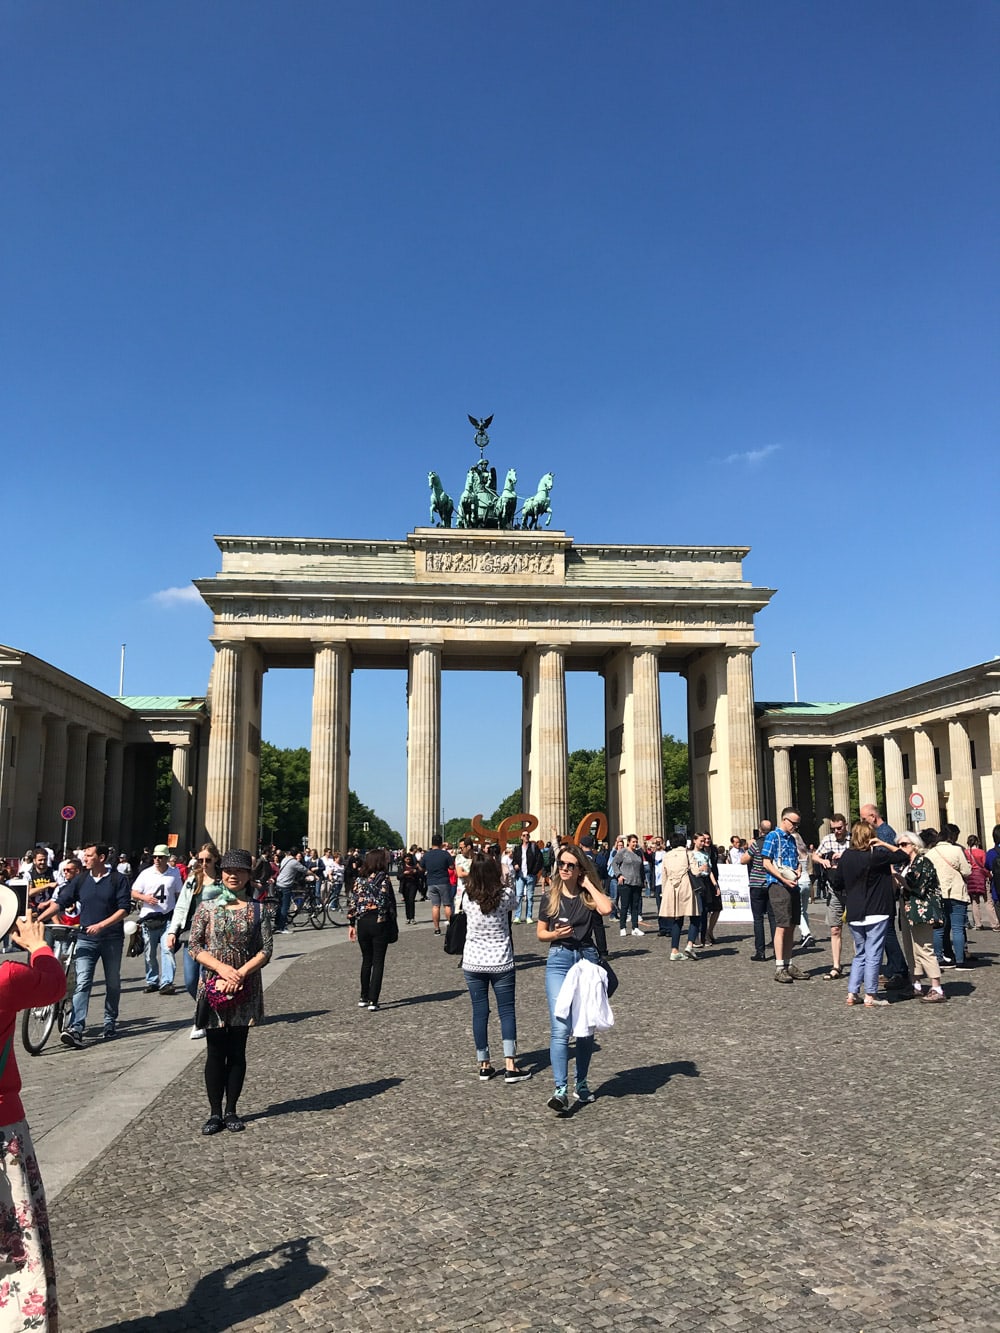 Brandenburg Gate in Berlin.